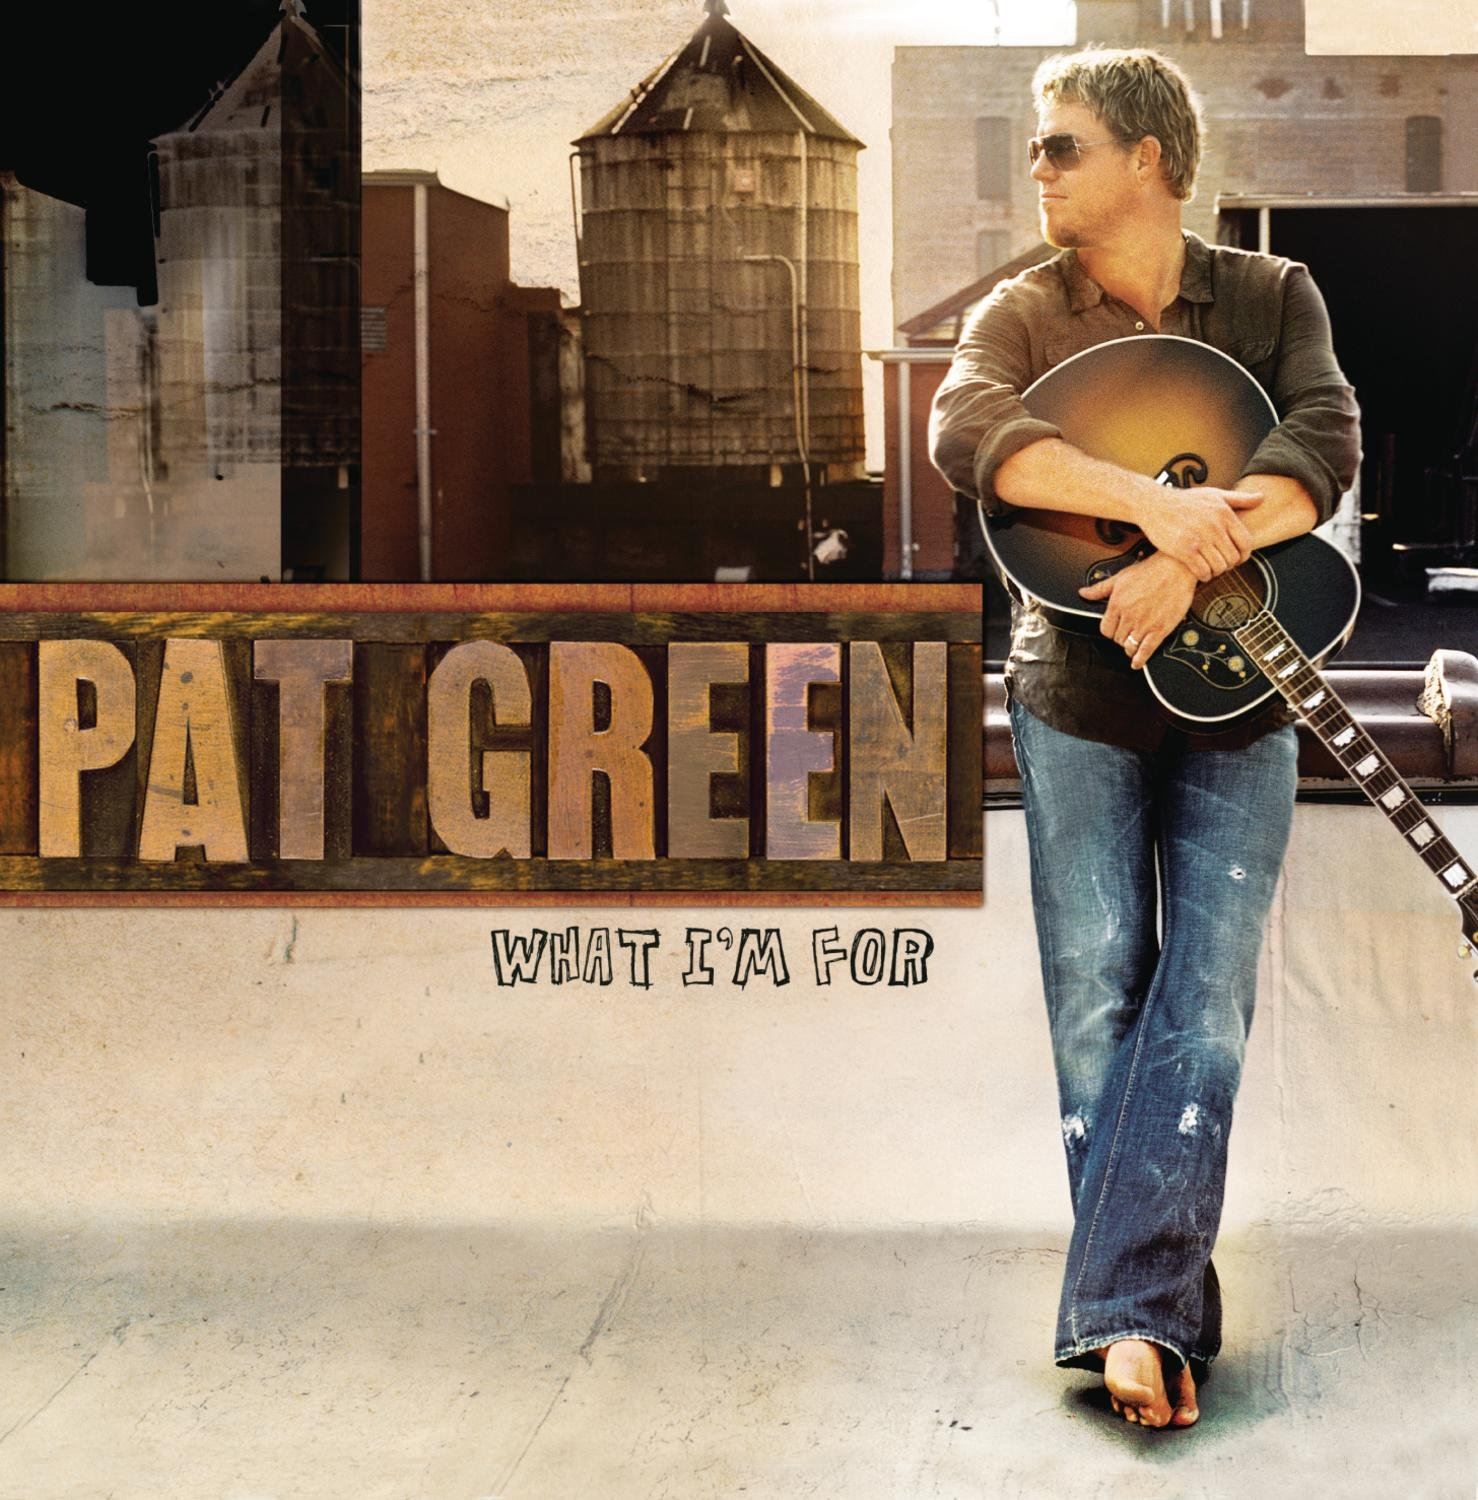 Texas Country Music Artist, Pat Green